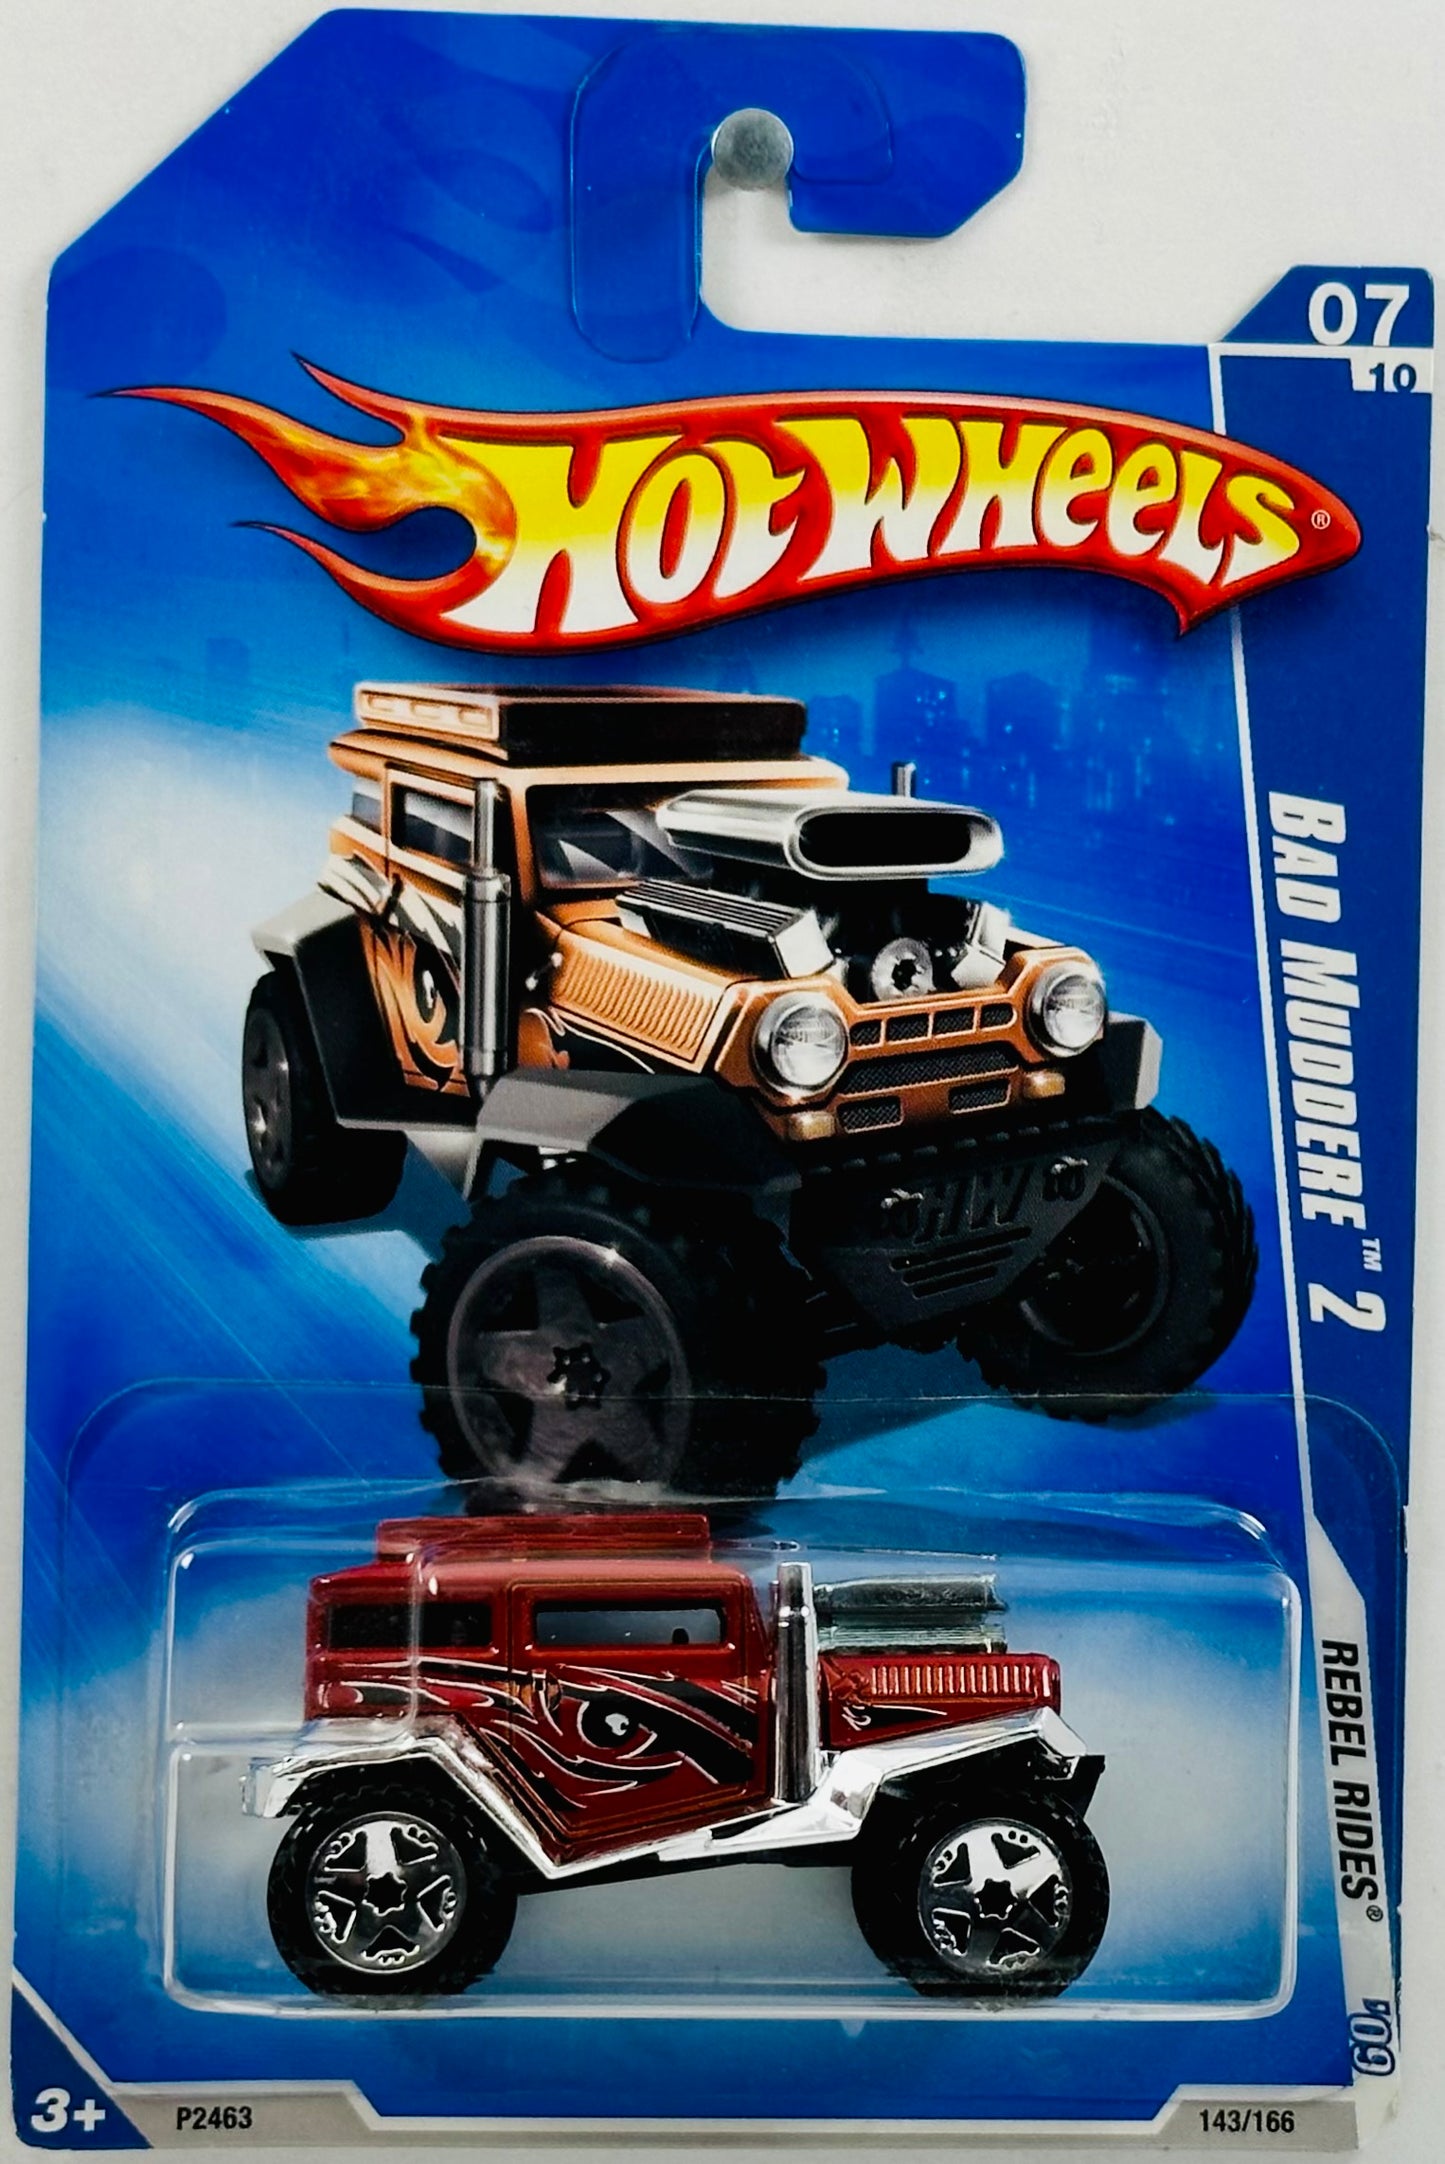 Hot Wheels 2009 - Collector # 143/166 - Rebel Rides 07/10 - Bad Mudder 2 - Red - IC